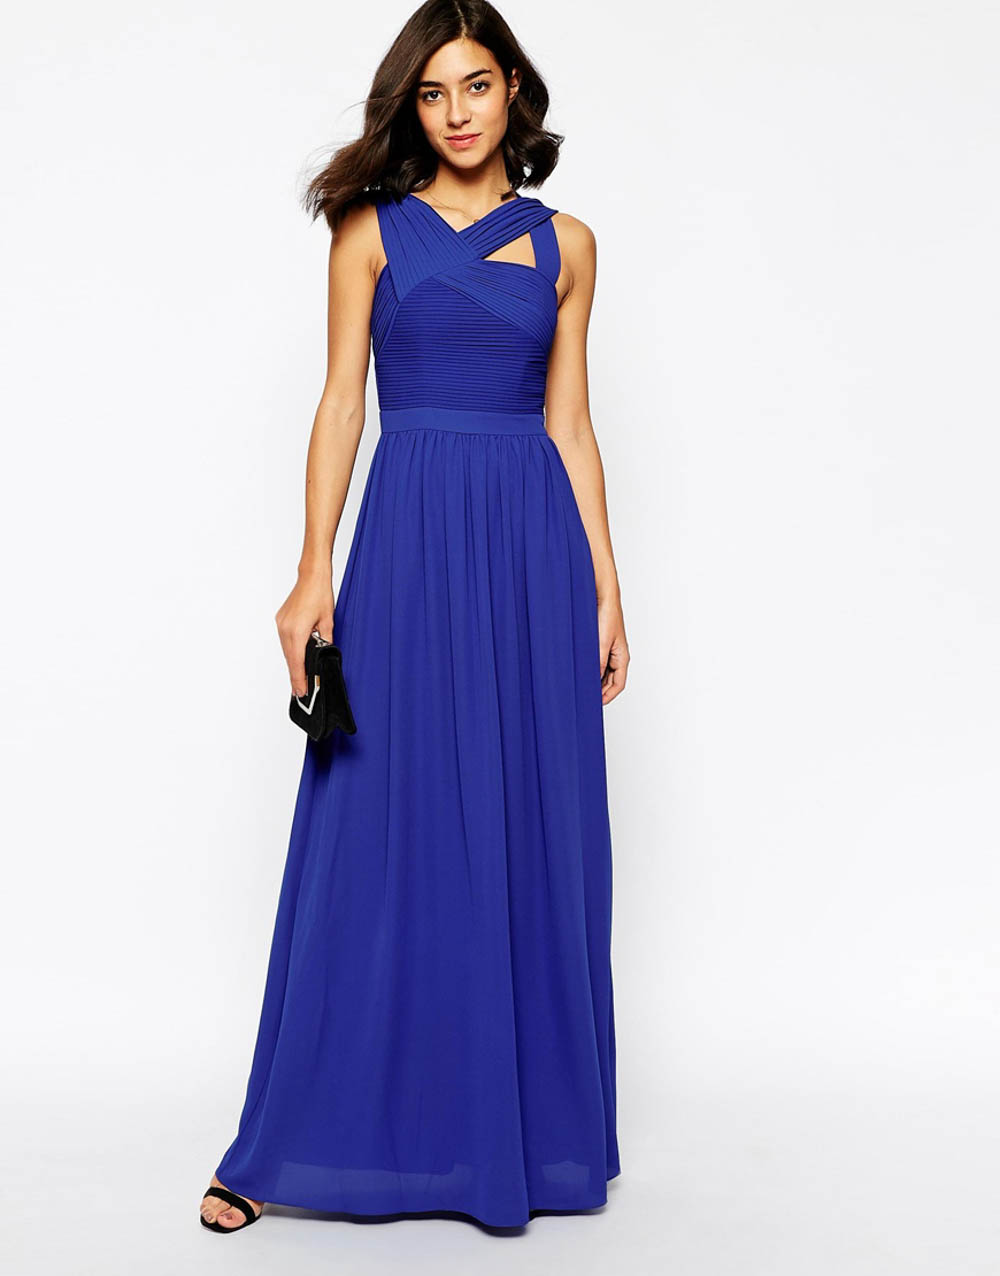 Blue bridesmaid dress